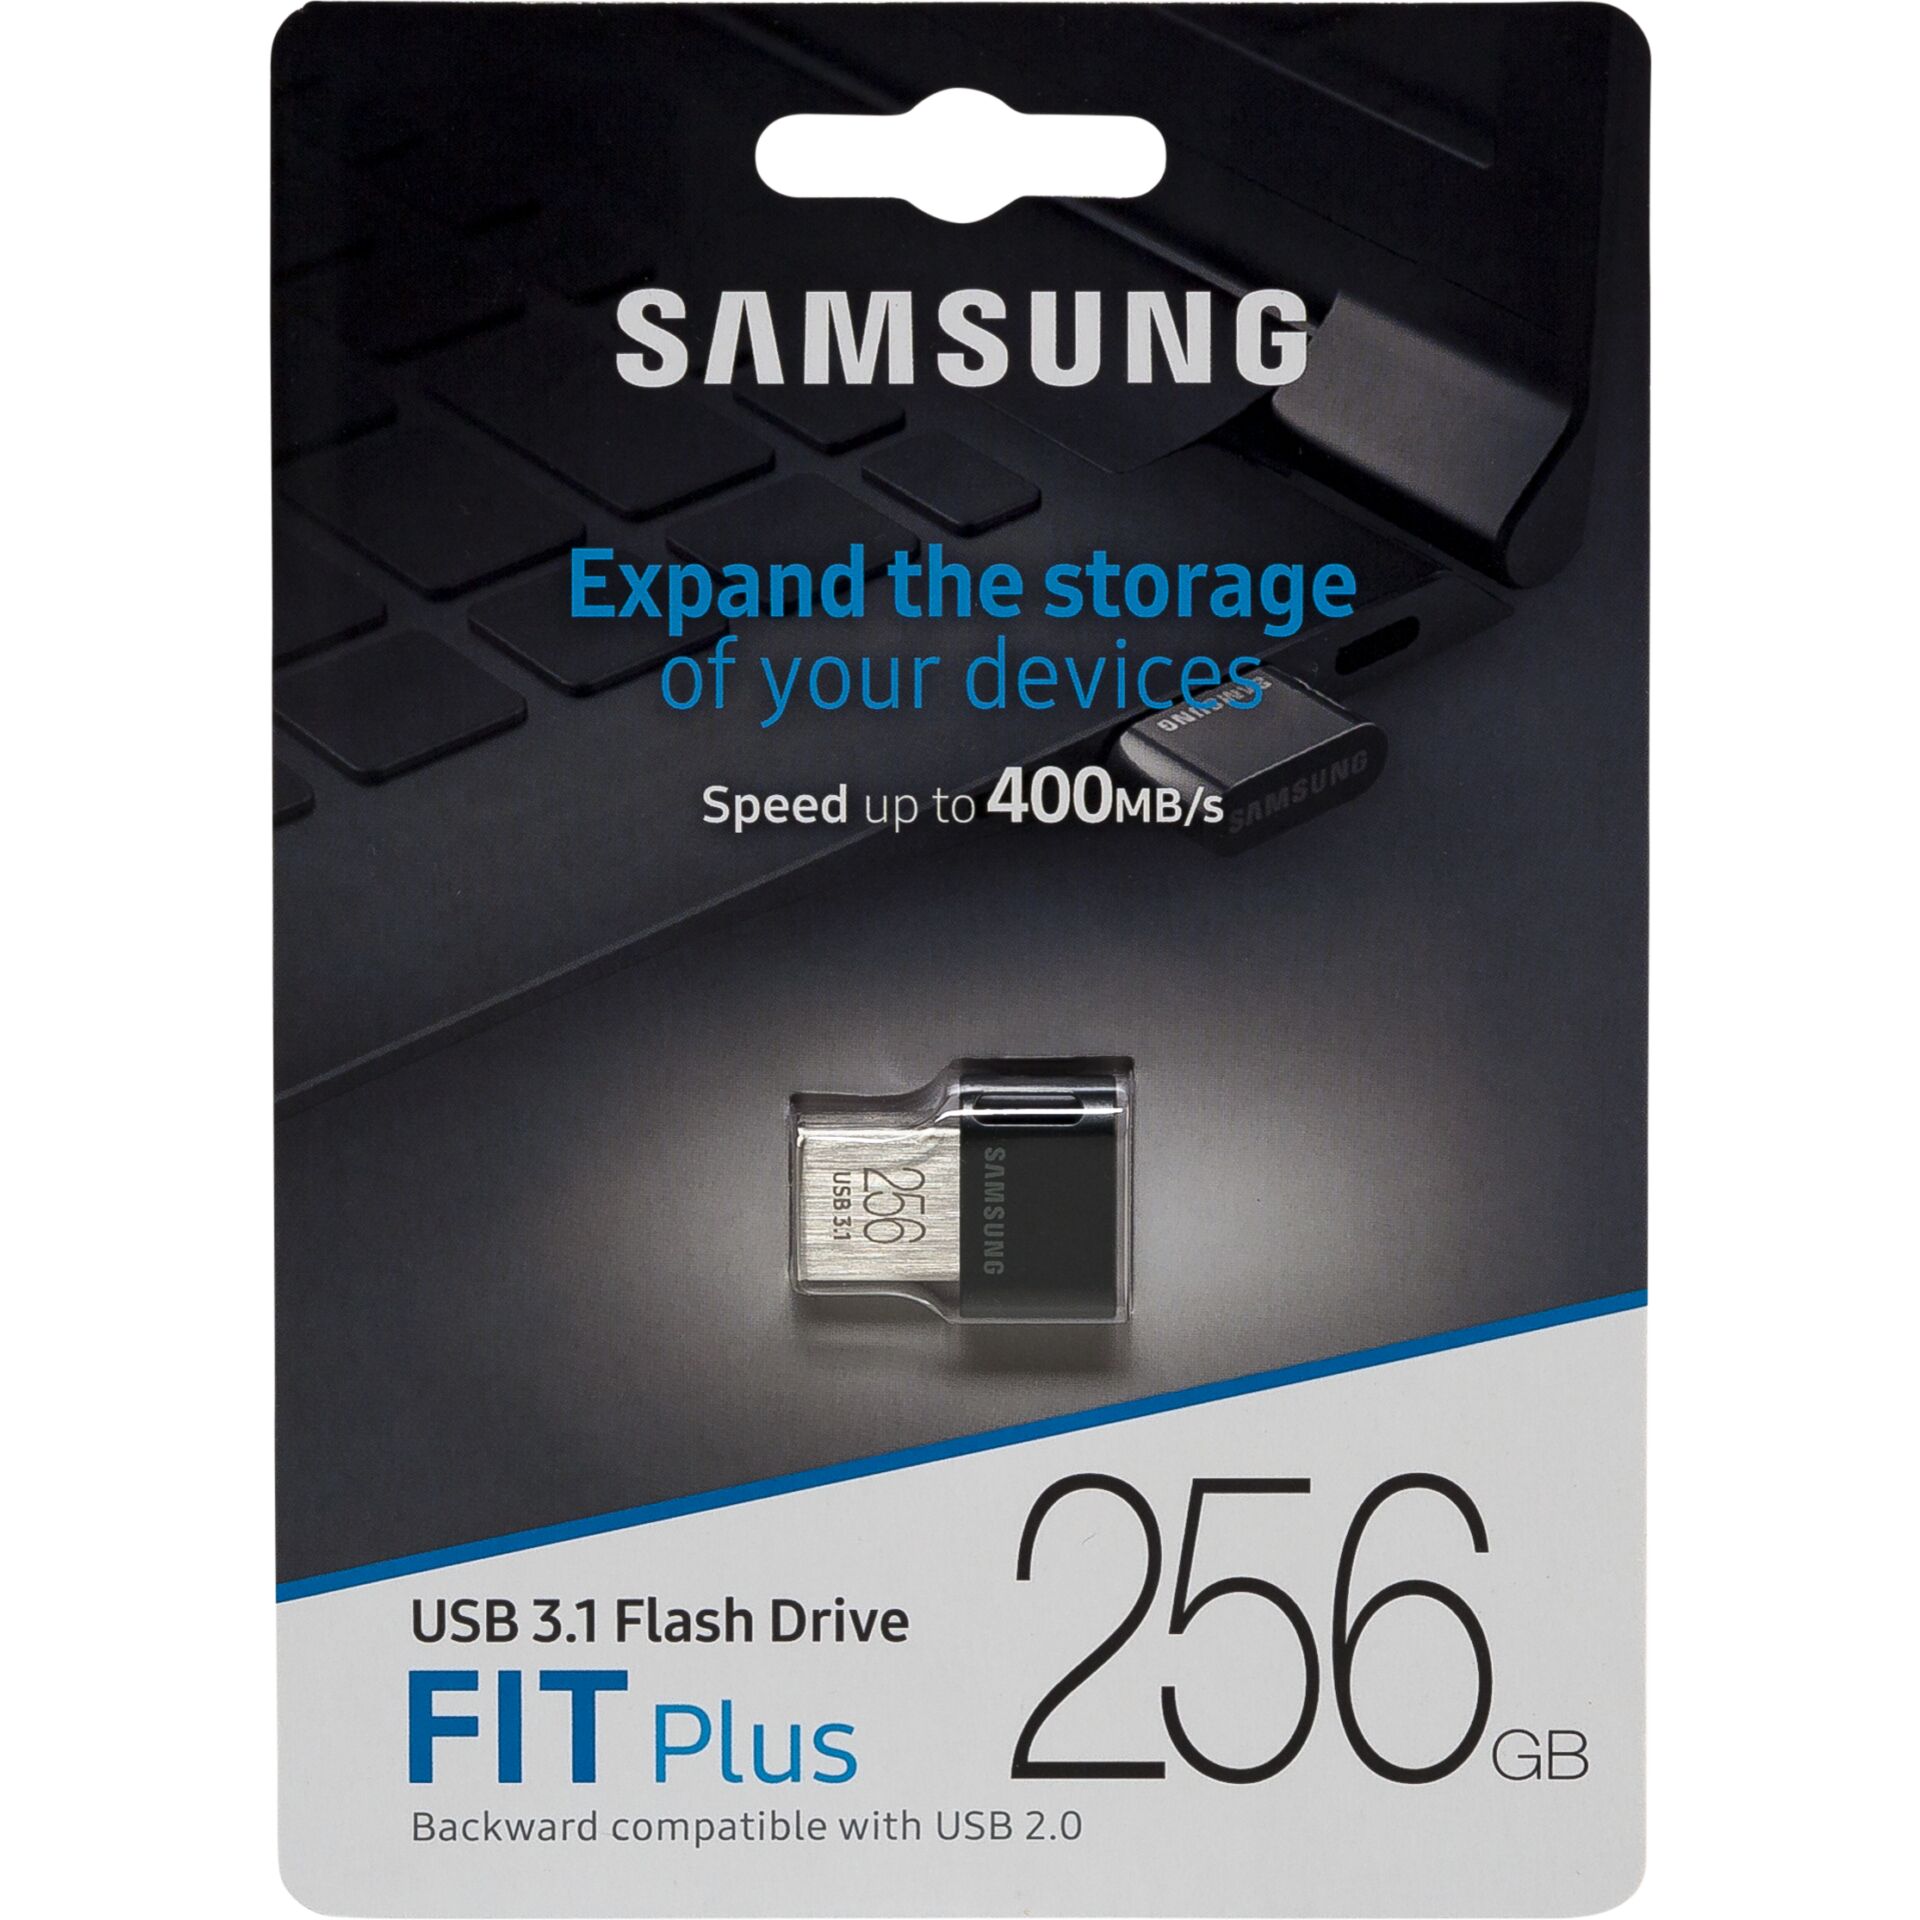 256 GB Samsung FIT Plus 2020 USB-Stick, USB-A 3.1, lesen: 400MB/s, schreiben: 110MB/s